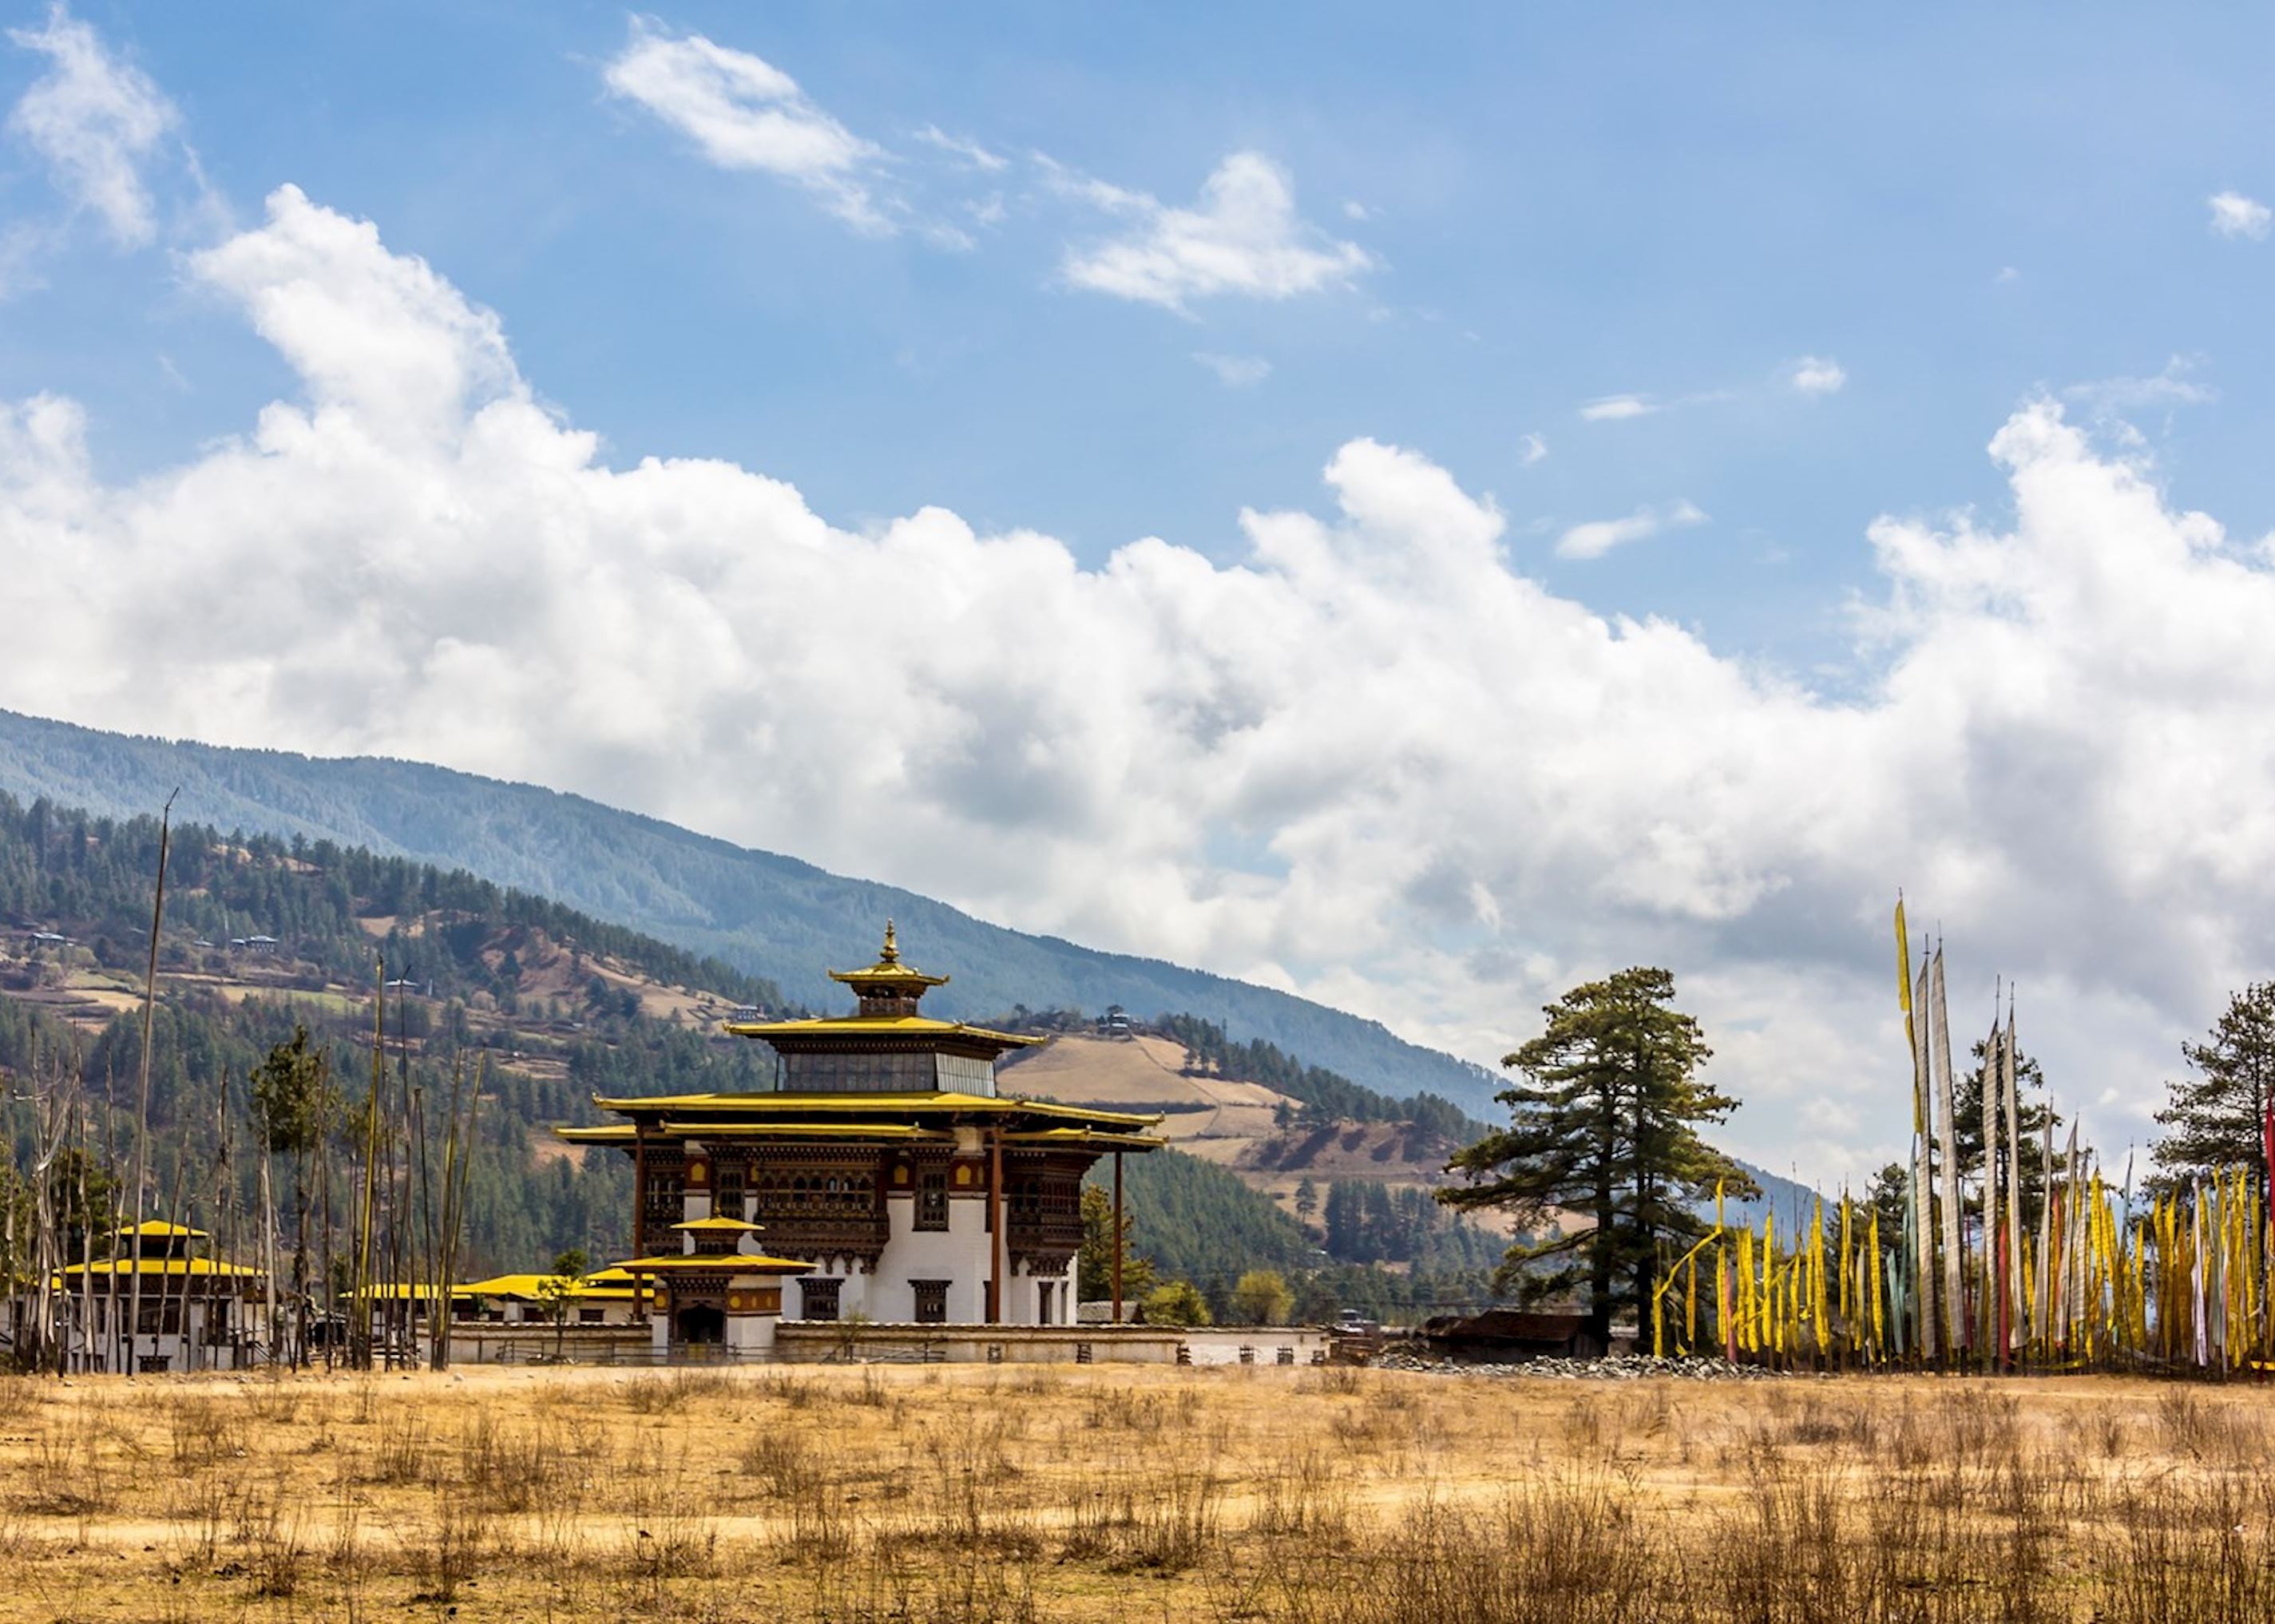 Bhutan tourism at its finest